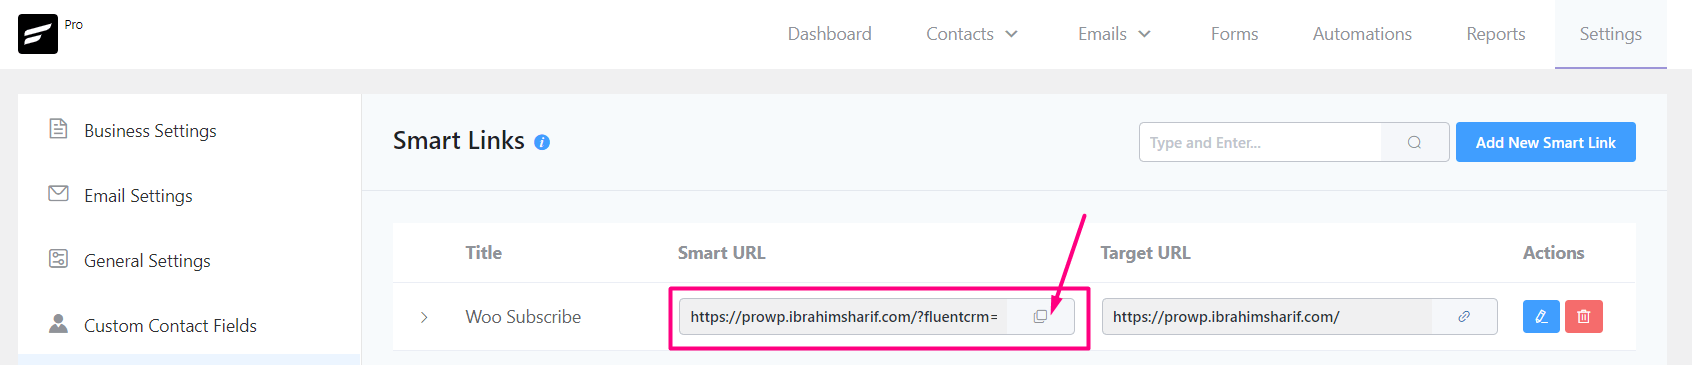 crm generated smart link copy